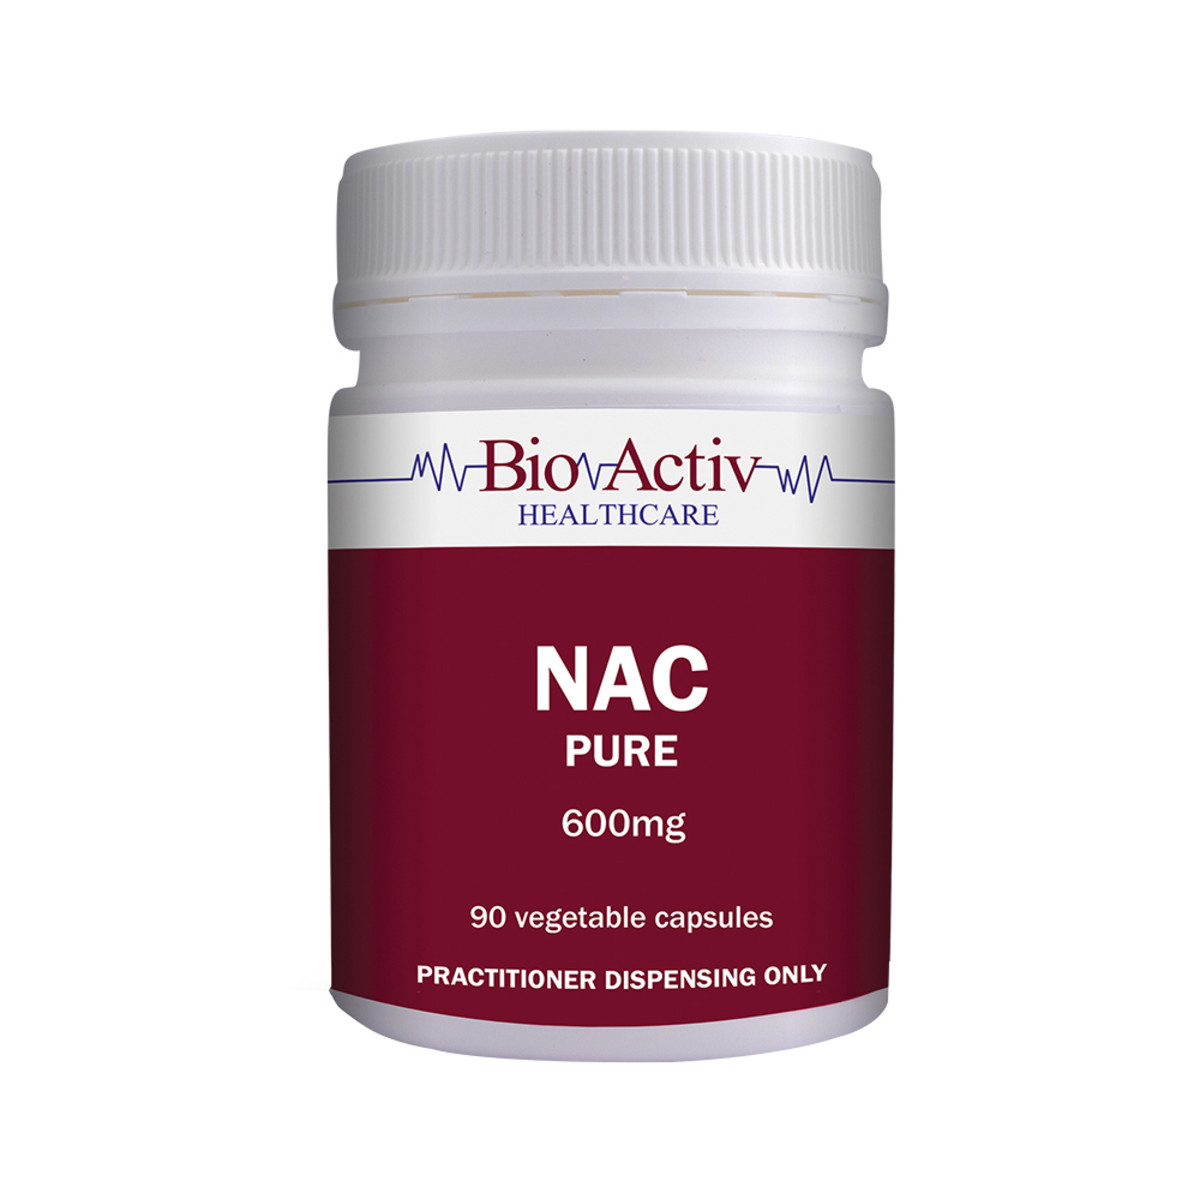 BIOACTIV HEALTHCARE - NAC Pure 600mg